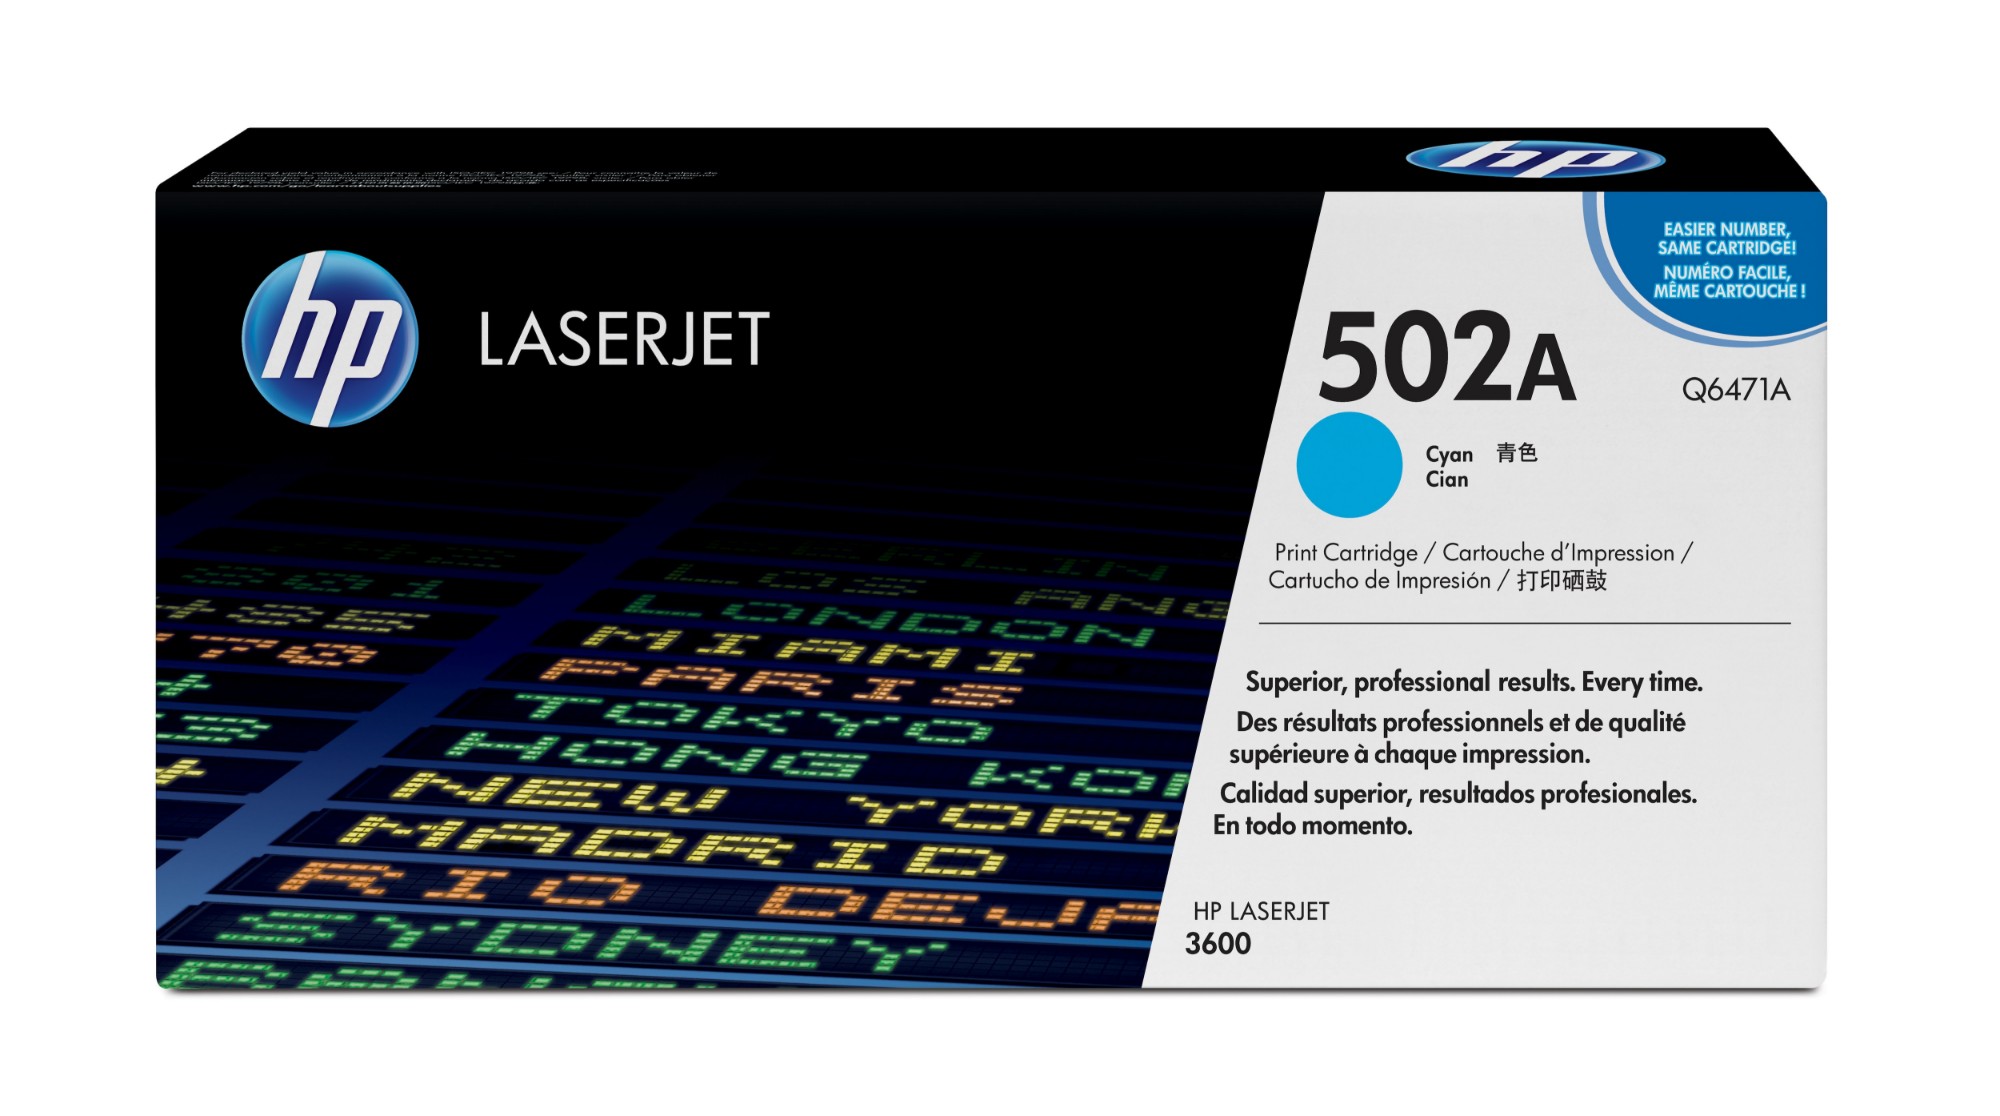 HP Q6471A/502A Toner cartridge cyan, 4K pages/5% for HP Color LaserJet 3600